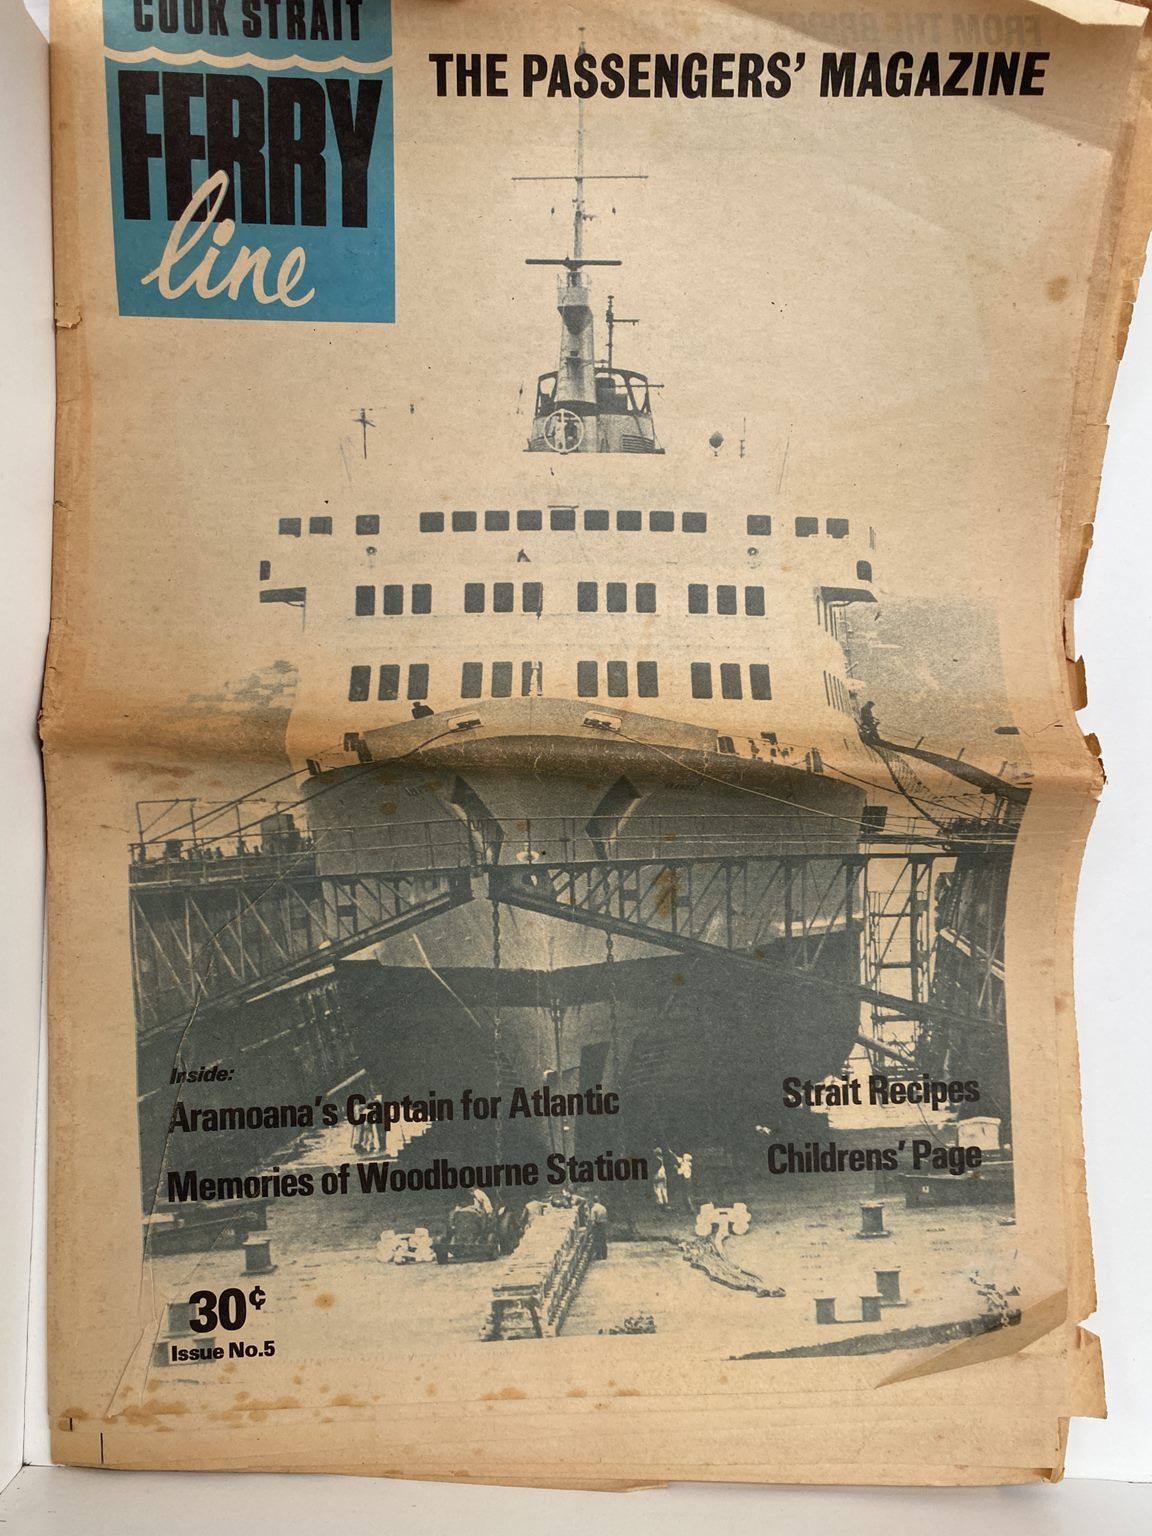 OLD NEWSPAPER: Cook Straight Ferry Line - Passengers' Magazine, No.5 Nov 1975